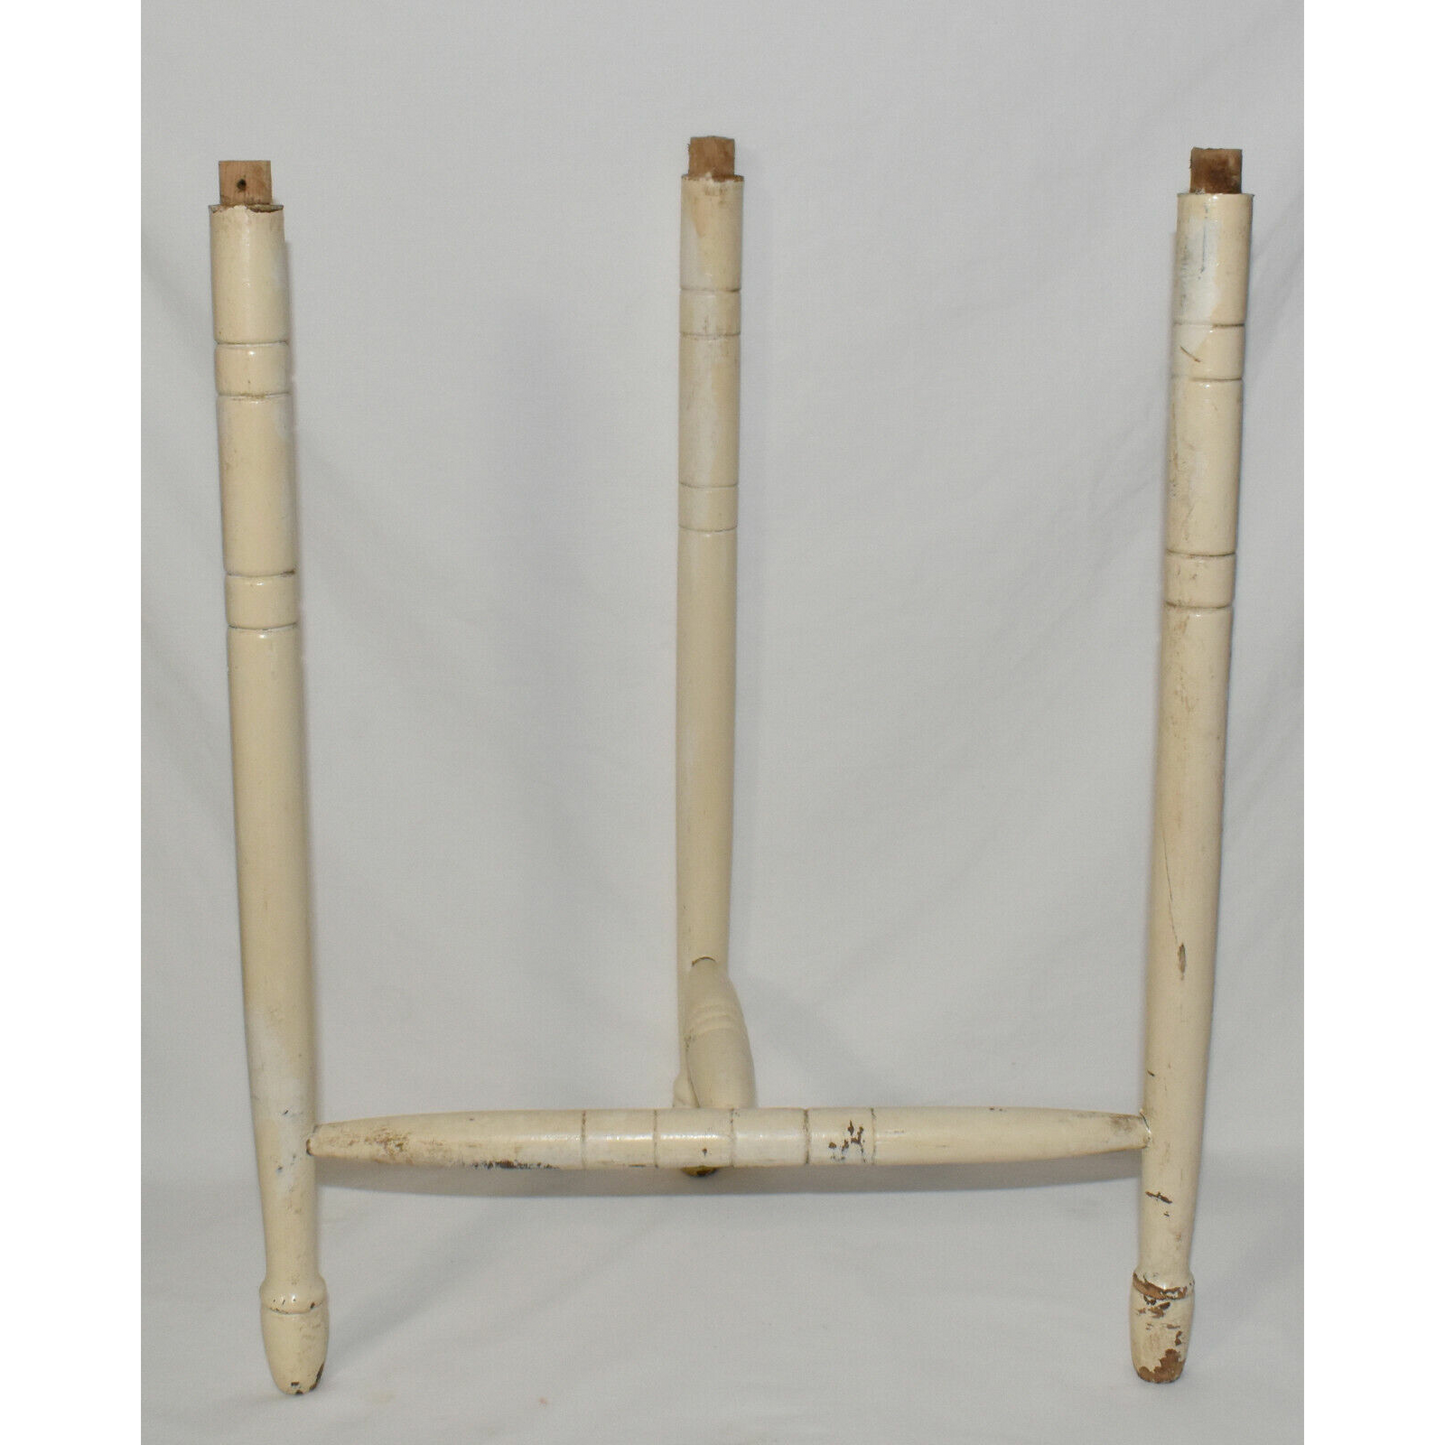 Vintage Solid Wood Table Legs 22" Tall 5pcs 3-Leg Table Base White Painted Wood